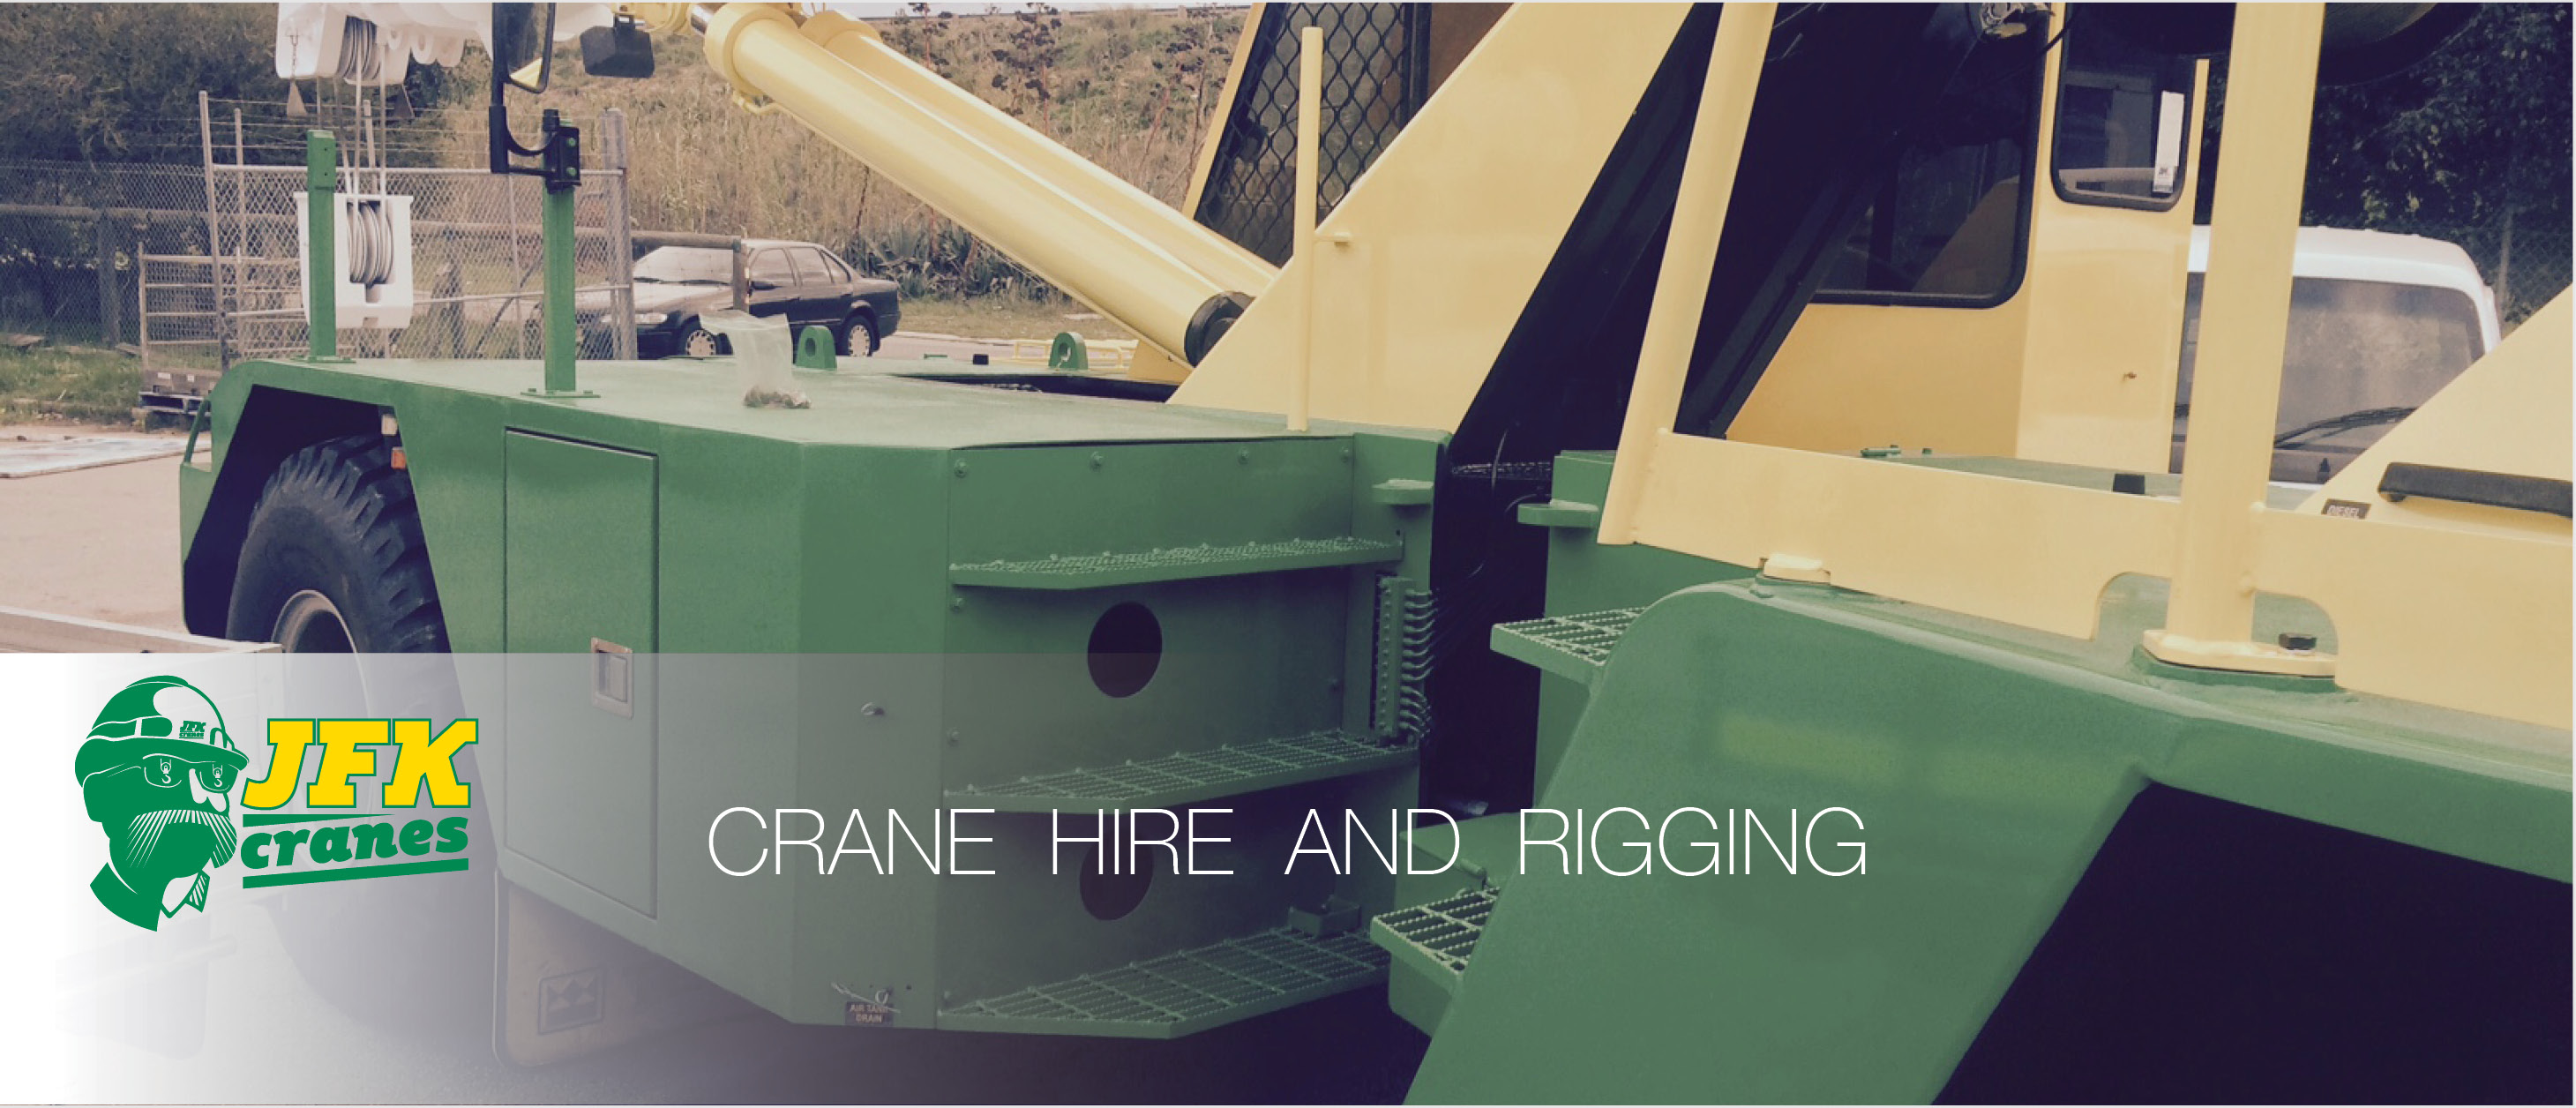 jfk-cranes-crane-hire-rigging-melbourne-25t-franna-slider-e